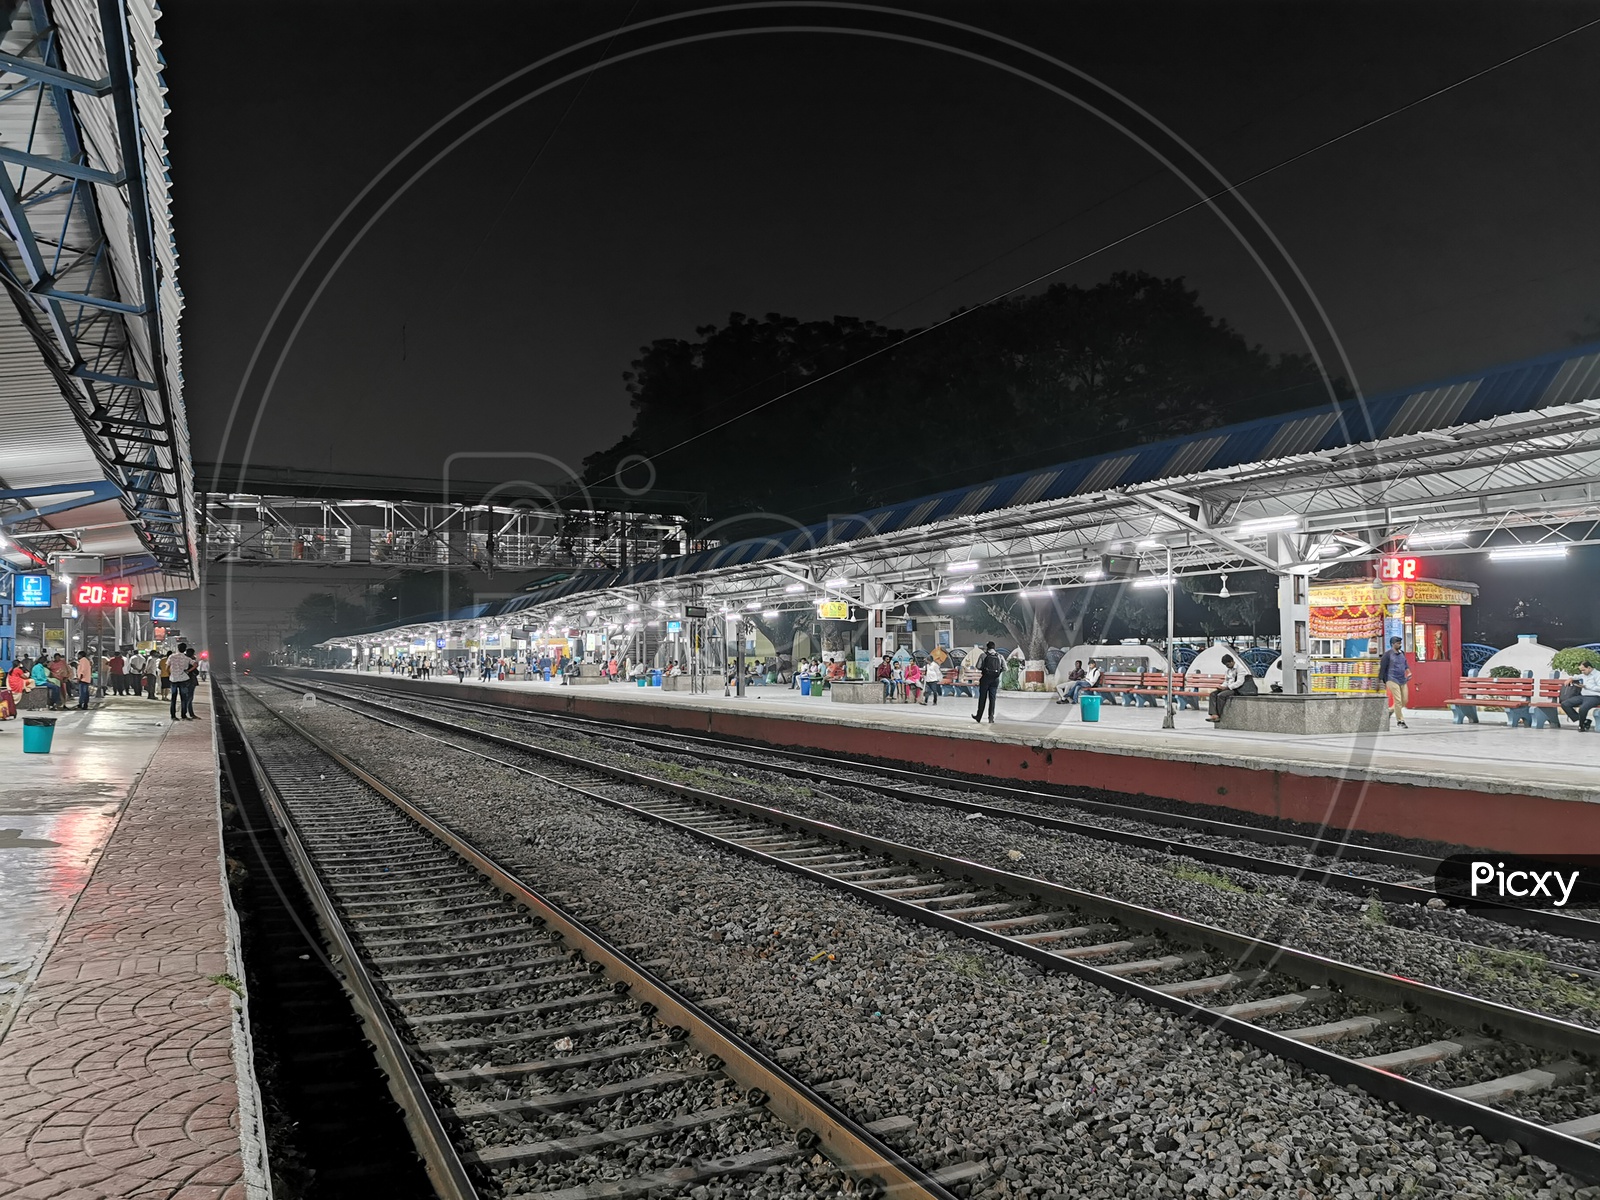 Night View of Lingampalli Railway Station Platforms